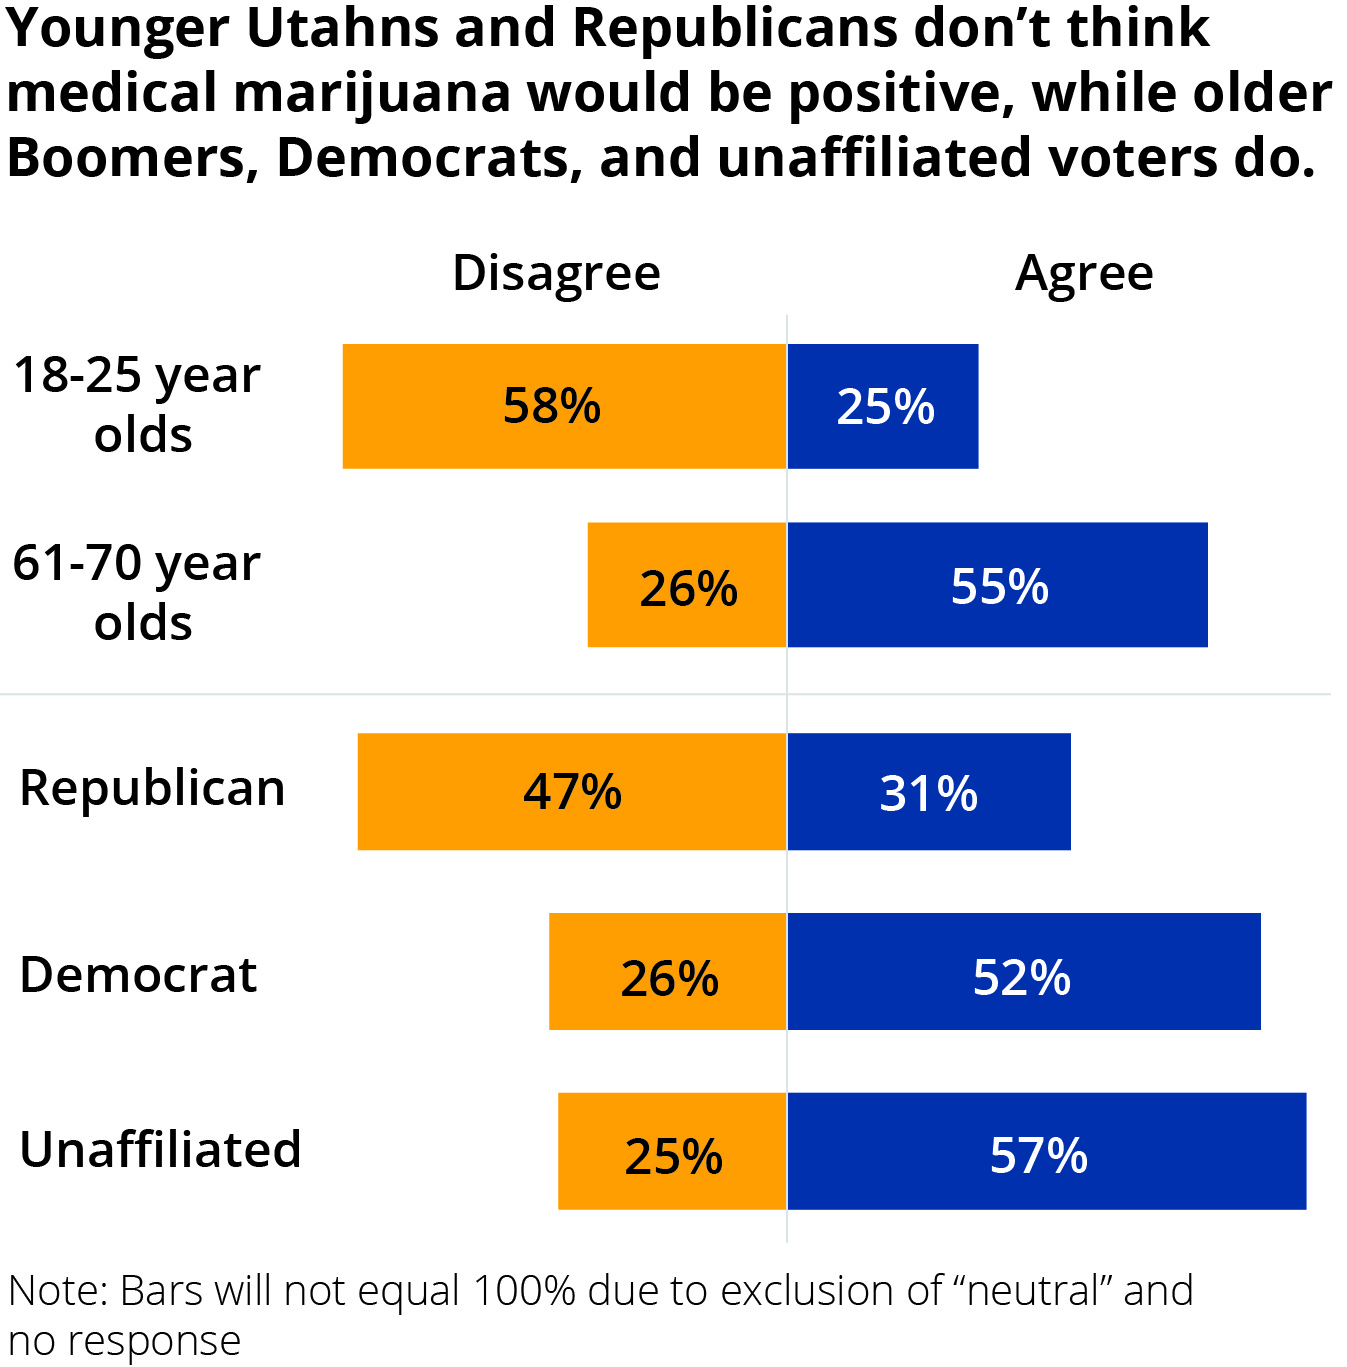 Support for medical marijuana